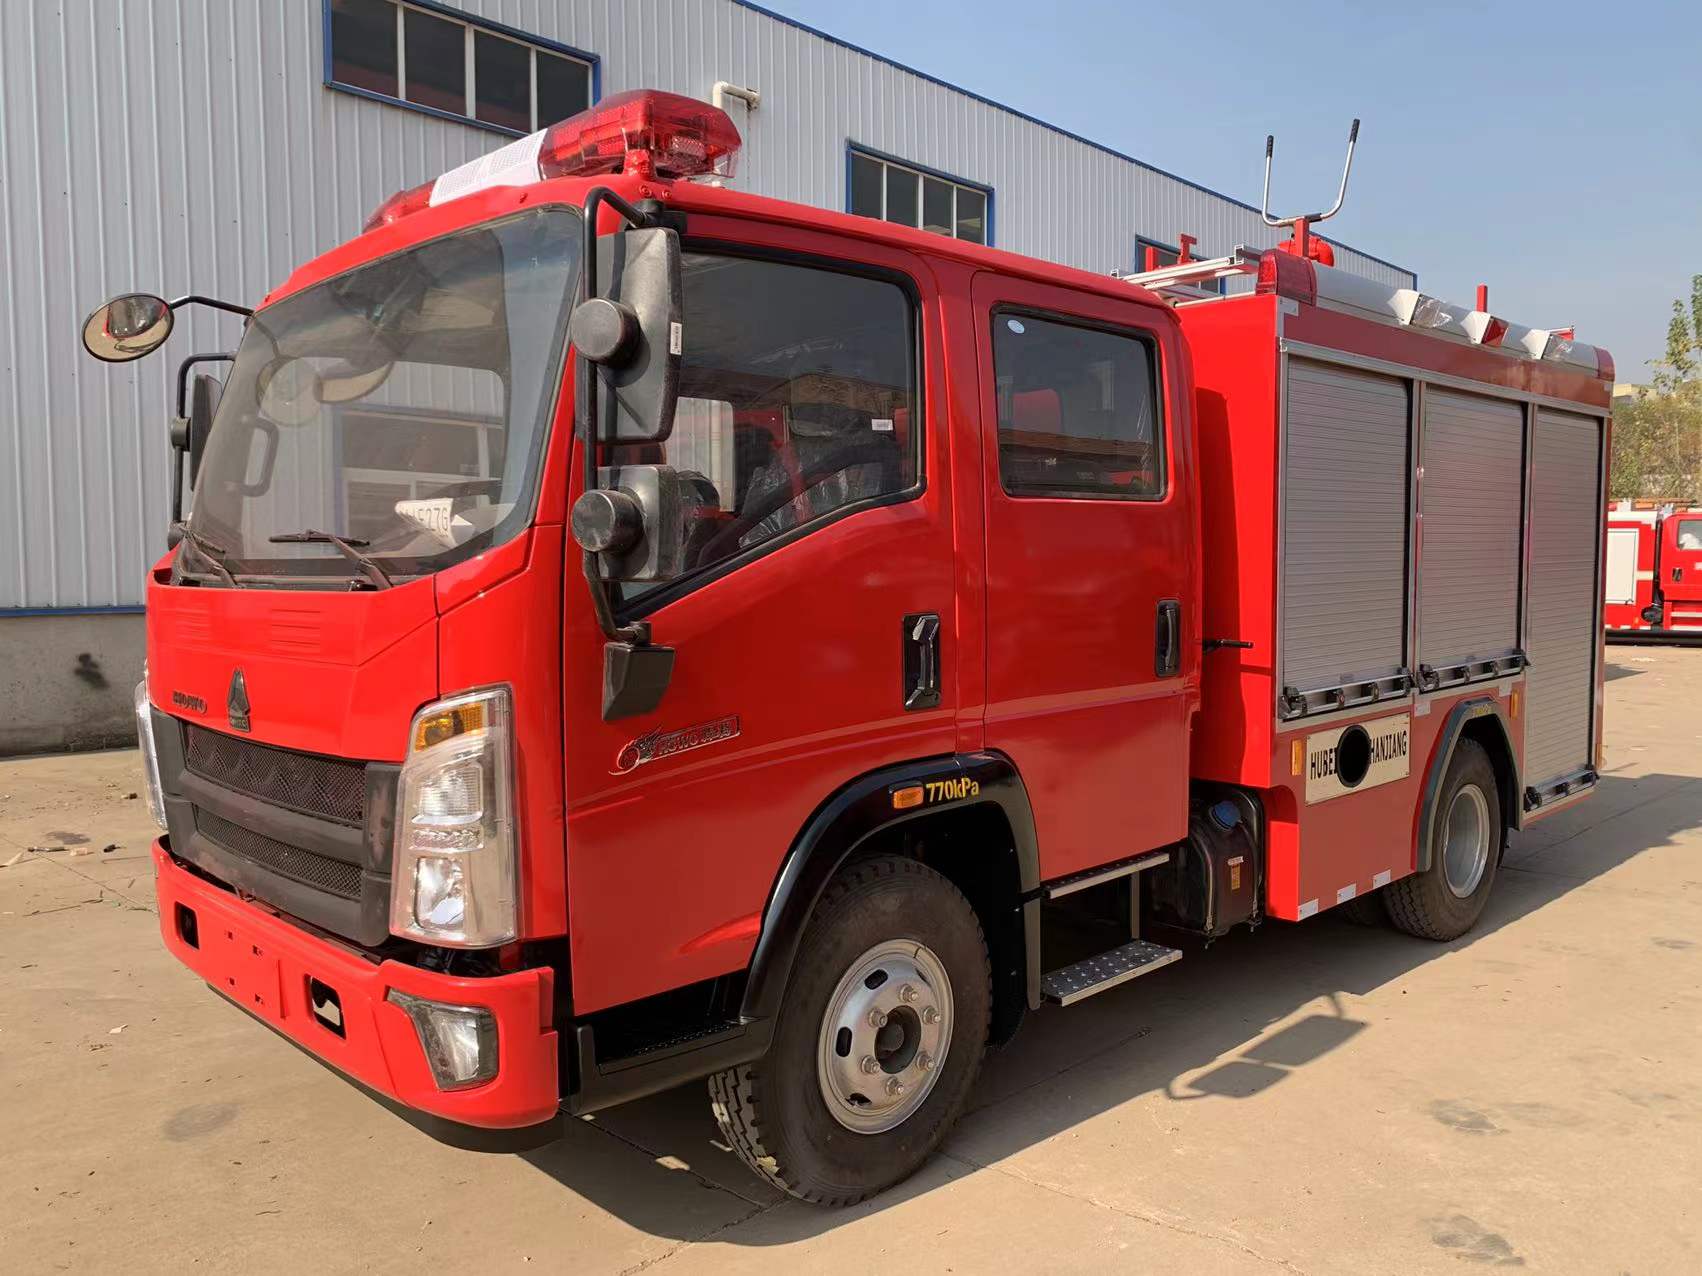 Wat is de samenstelling en het gebruik van brandweerwagens